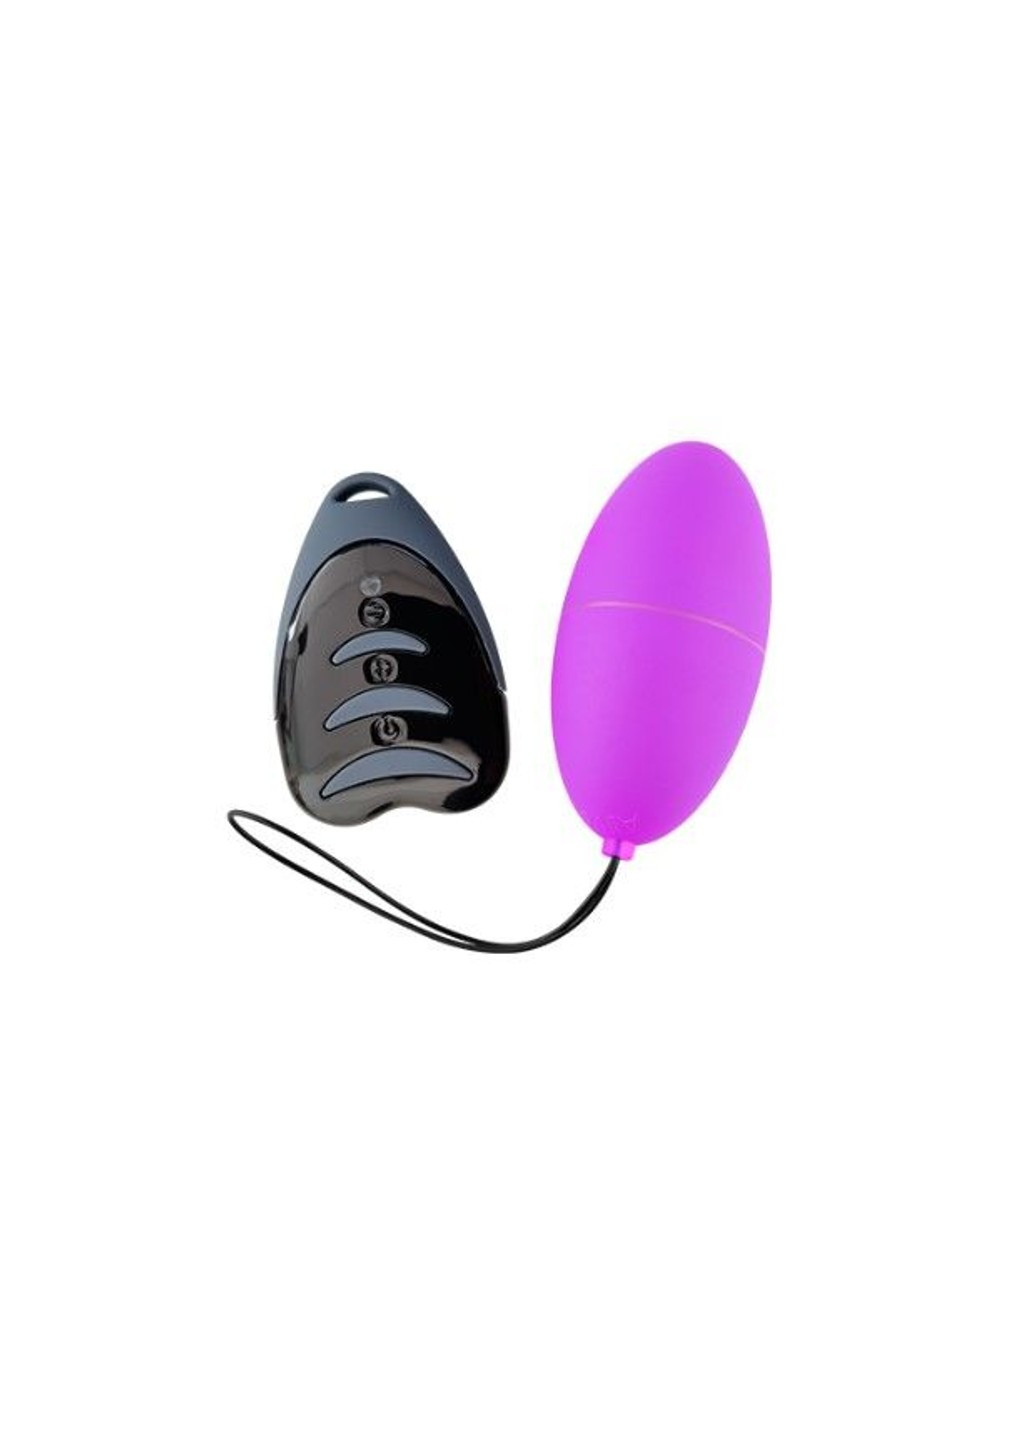 Виброяйцо Magic Egg 3.0 Purple с пультом ДУ, на батарейках Alive (277234926)